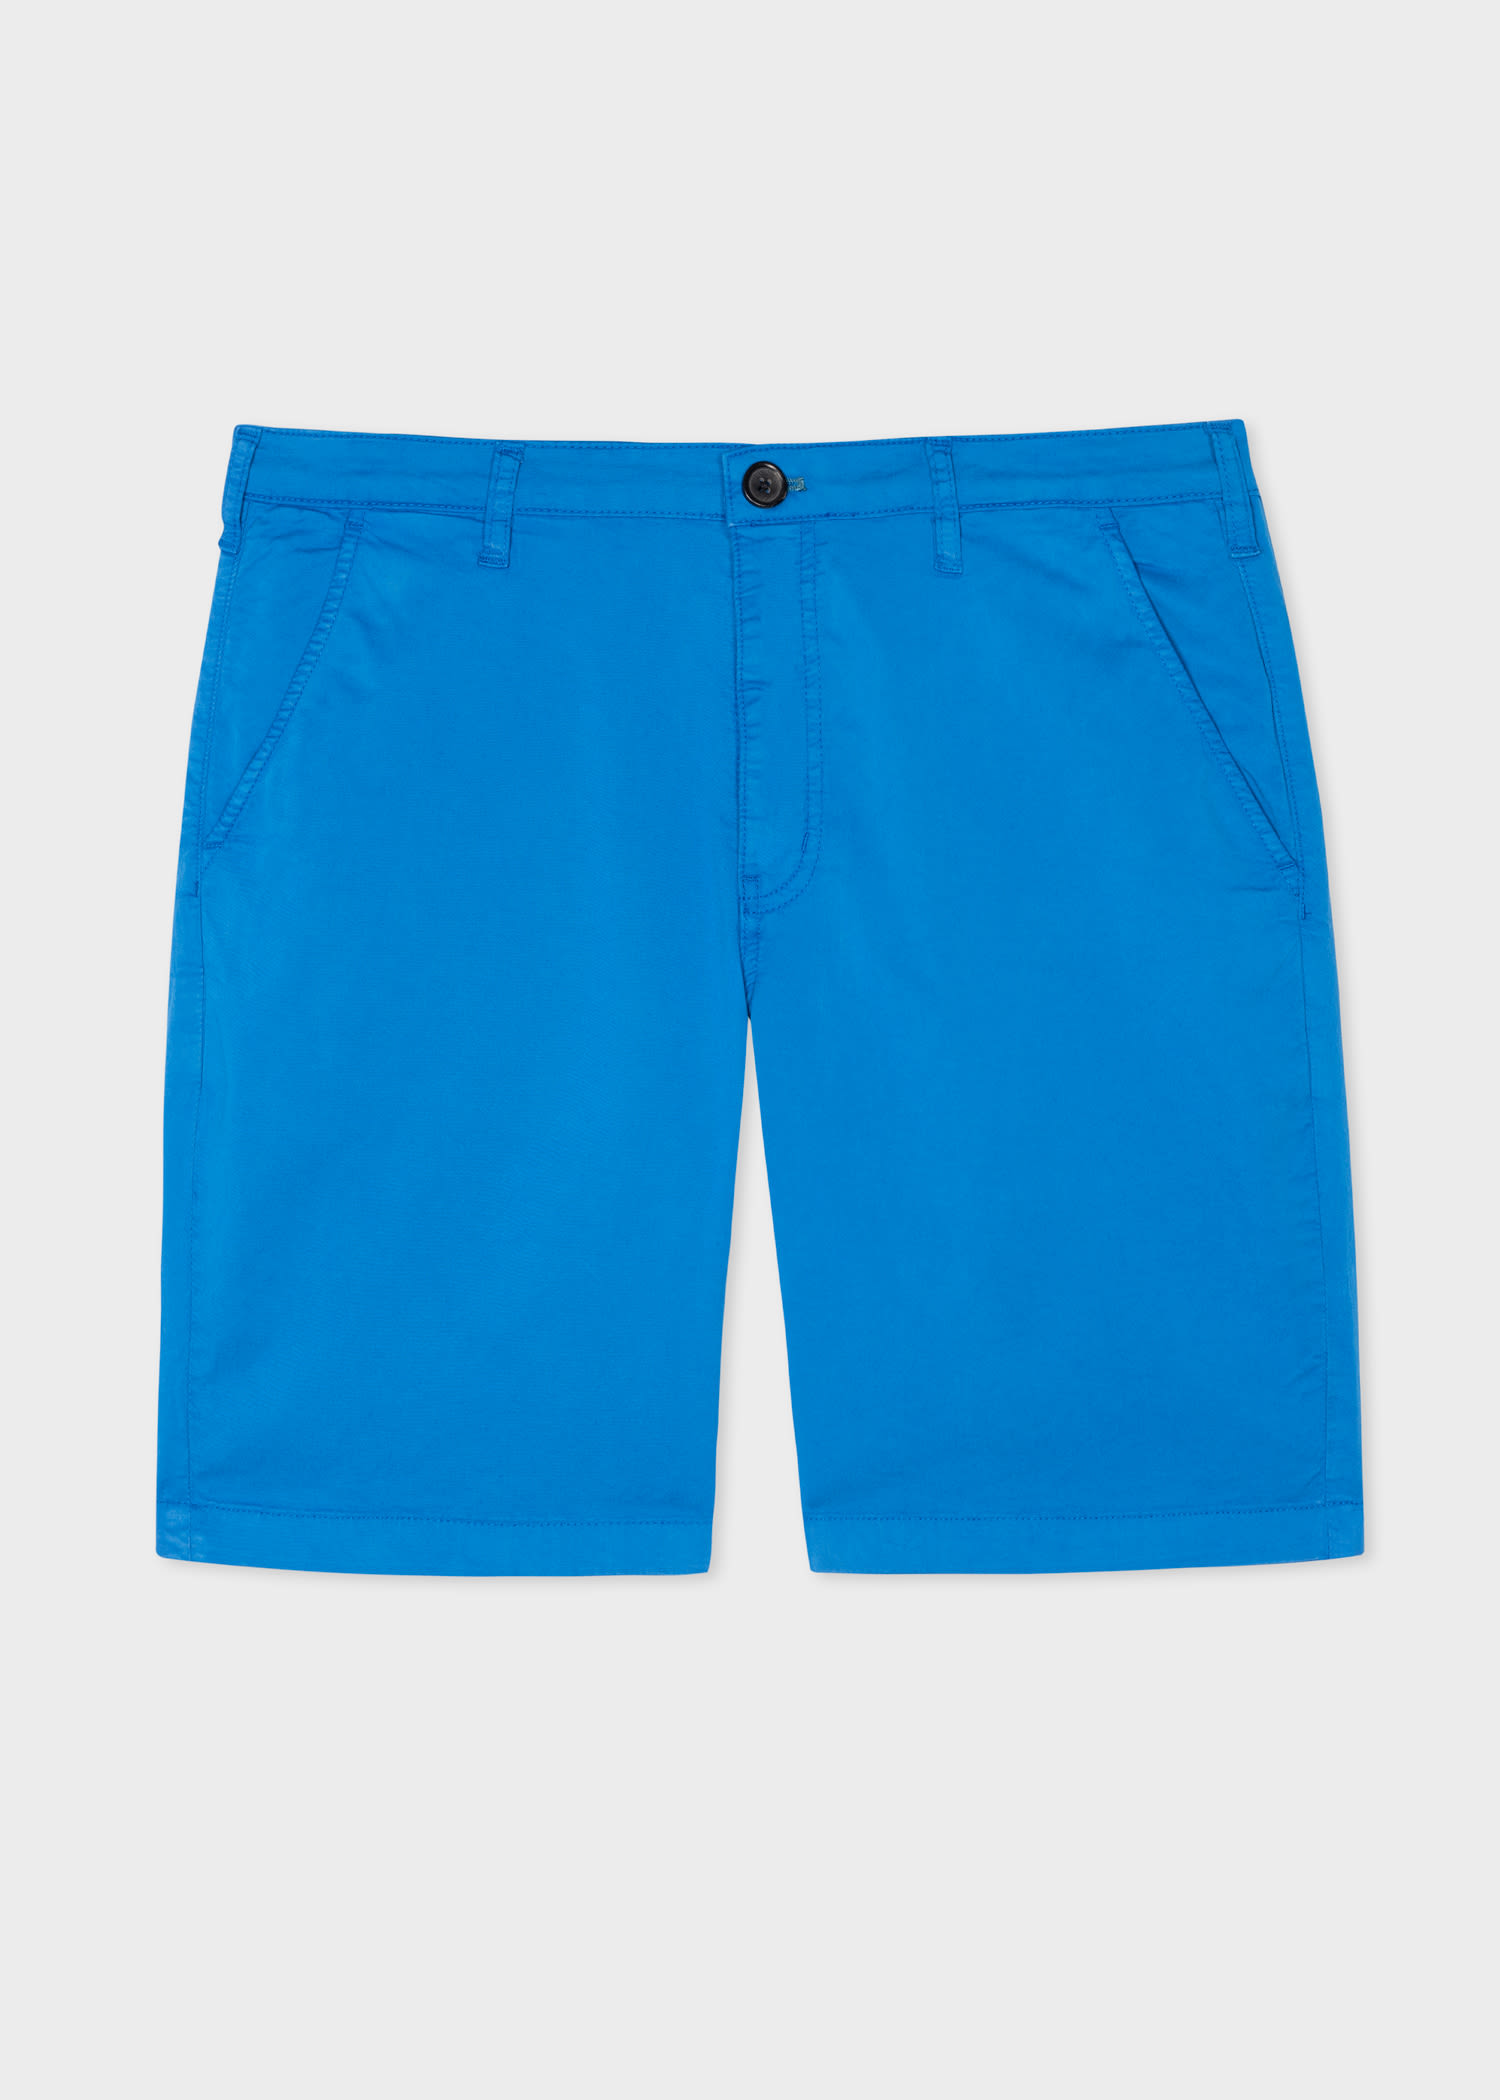 2-in-1 Blue and Green Lizard Flex Shorts – P.T. 1 Apparel